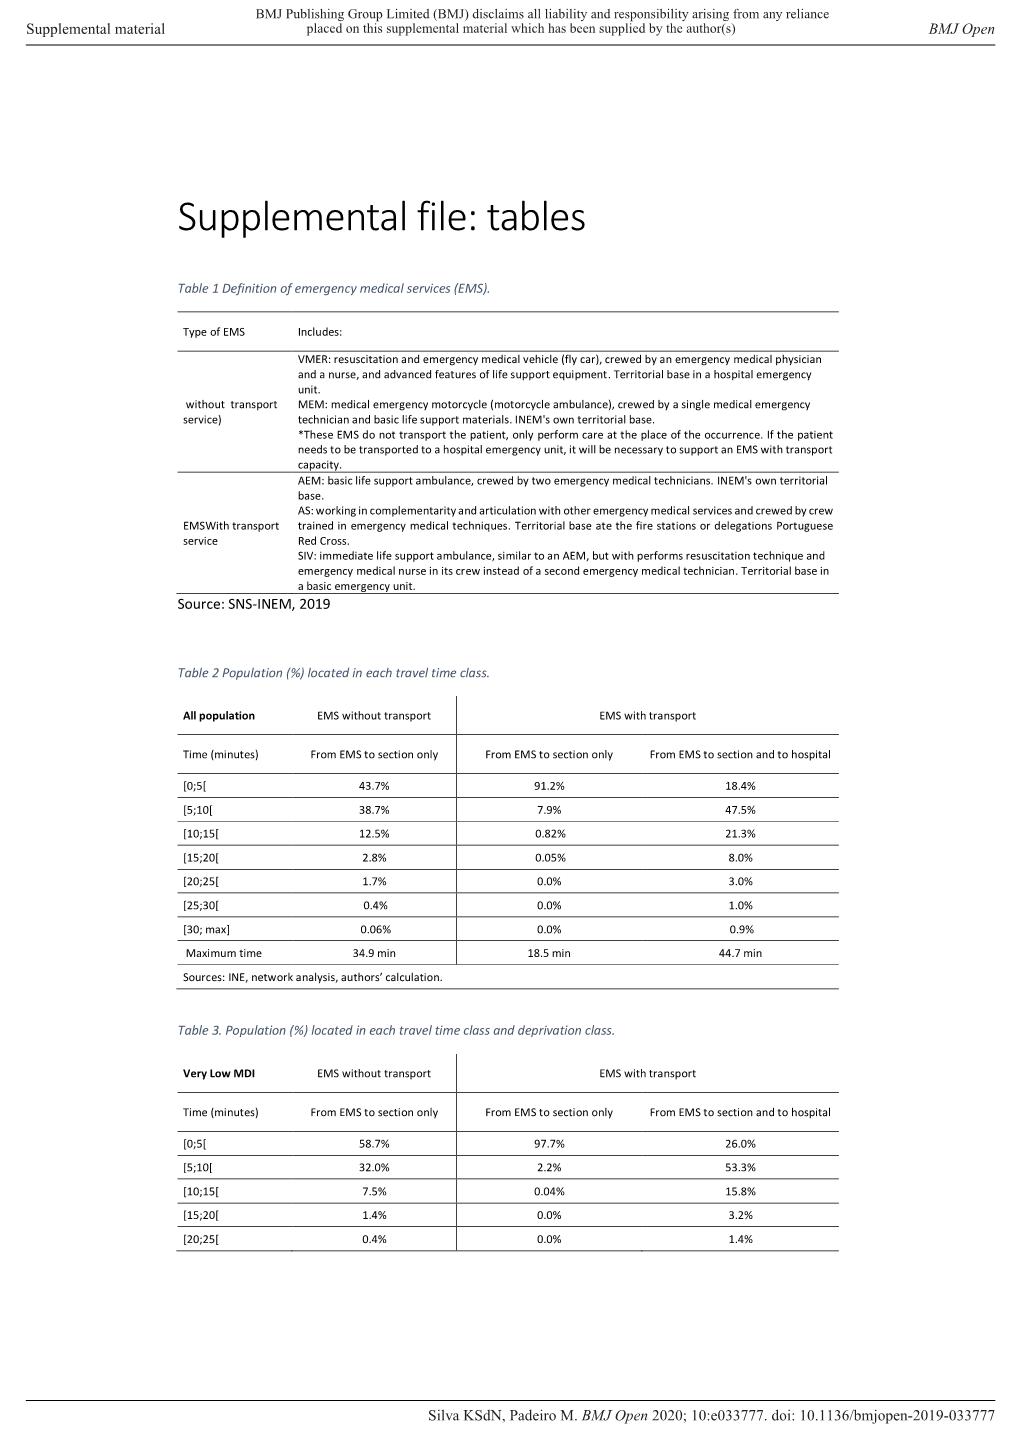 Supplemental File: Tables